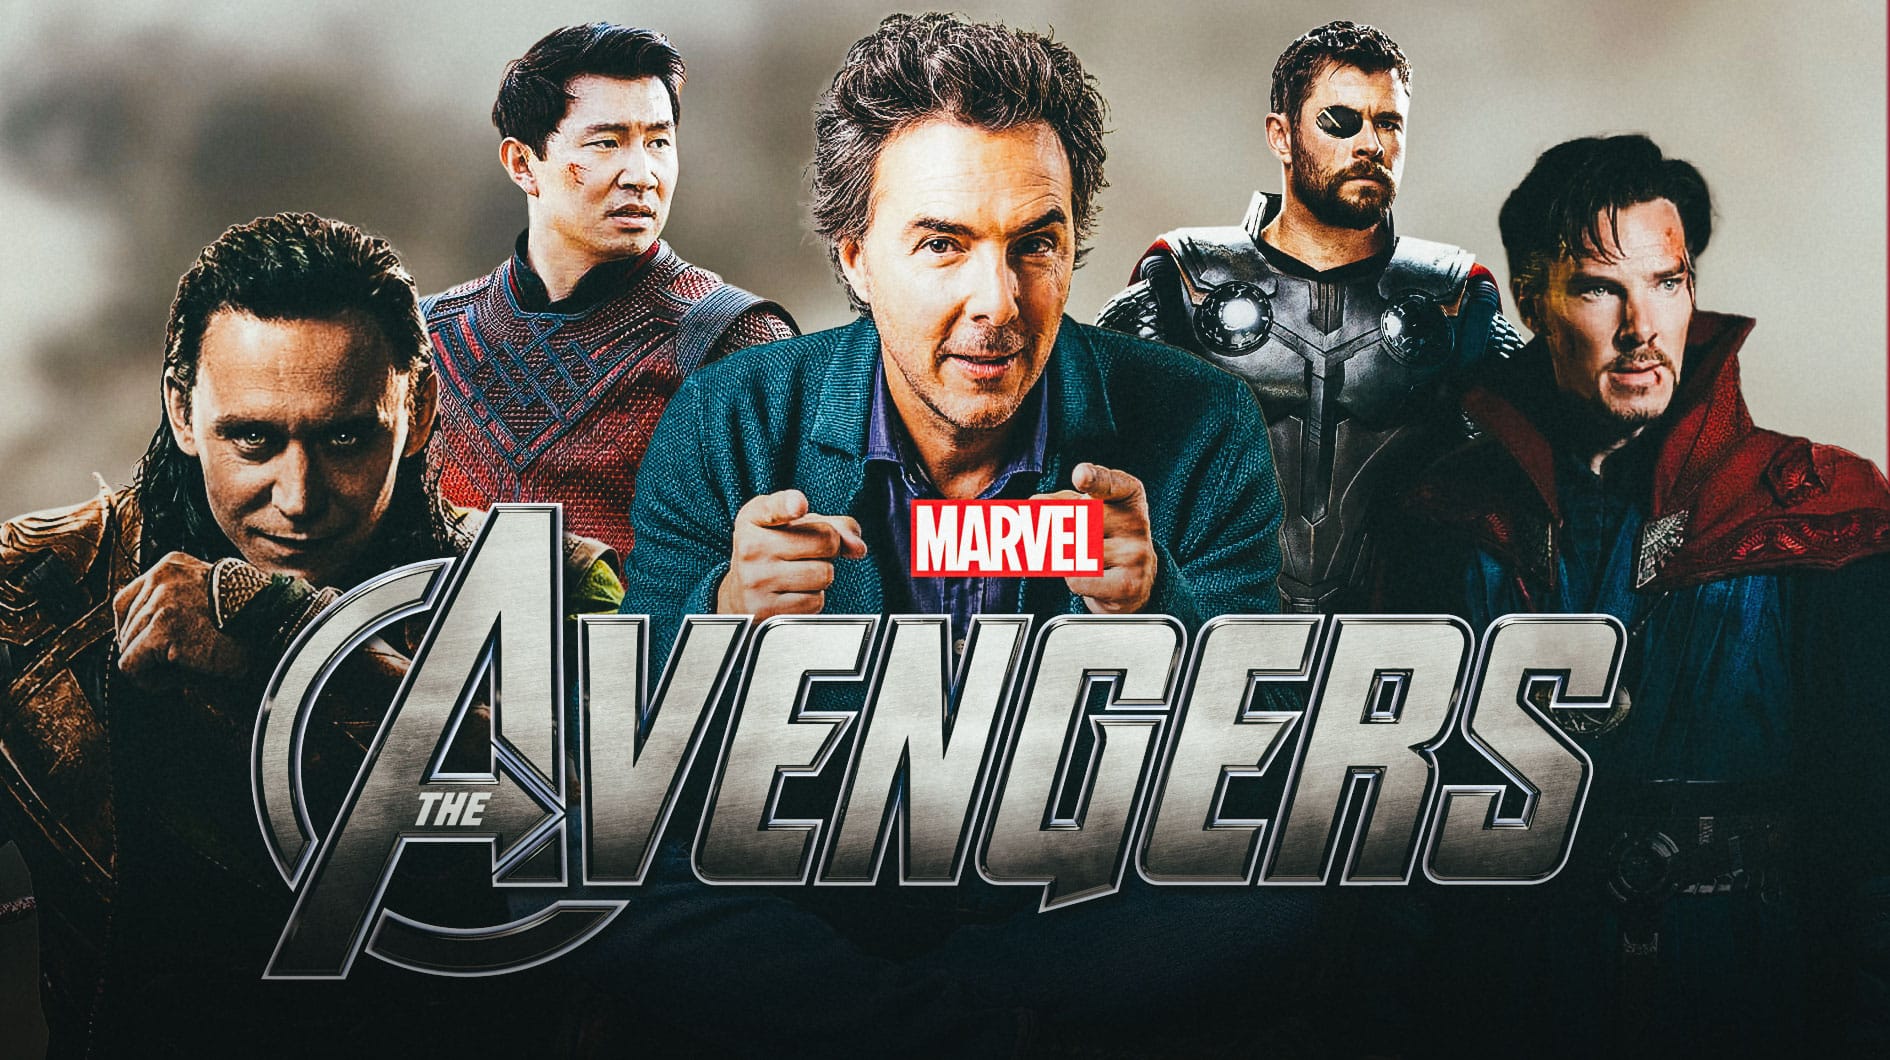 MCU Avengers logo with Shawn Levy, Loki (Tom Hiddleston), Shang-Chi (Simu Liu), Thor (Chris Hemsworth), and Doctor Strange (Benedict Cumberbatch).